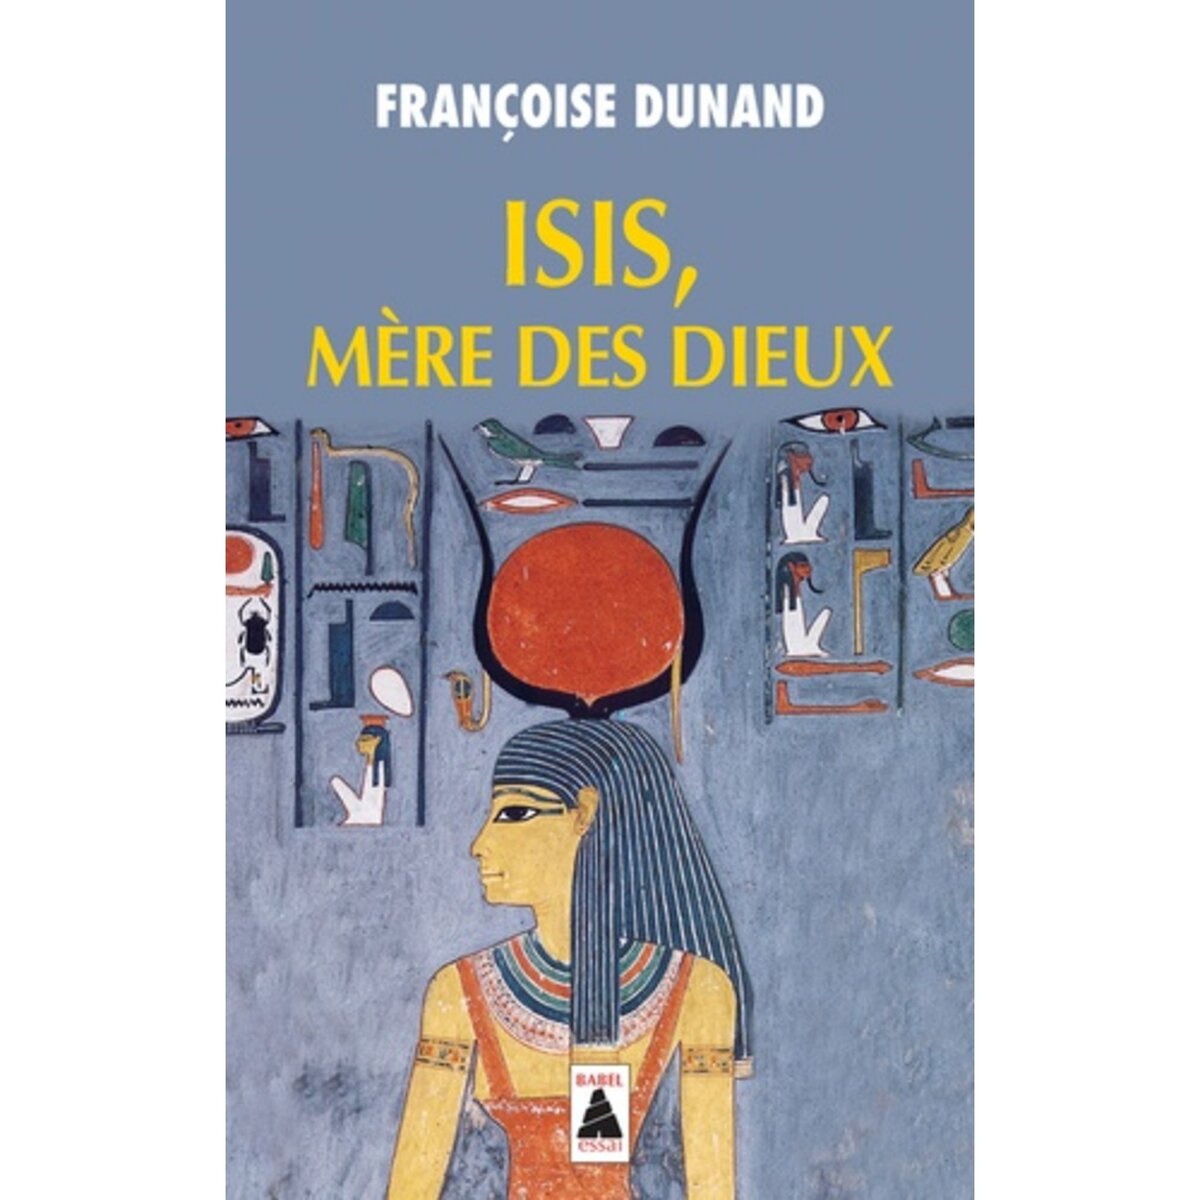  ISIS, MERE DES DIEUX, Dunand Françoise